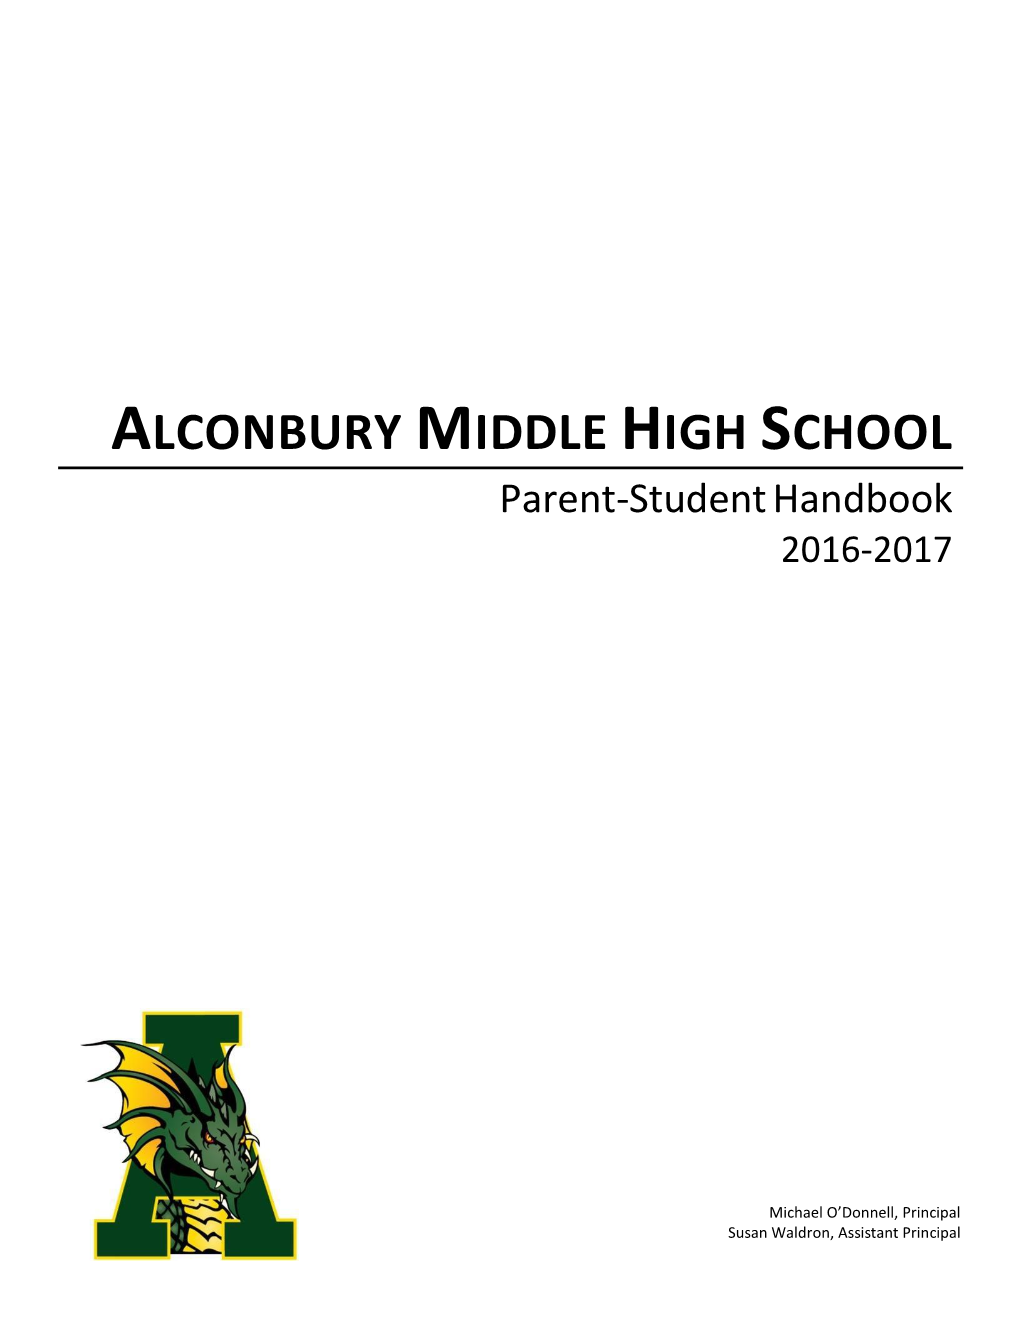 ALCONBURY MIDDLE HIGH SCHOOL Parent-Student Handbook 2016-2017